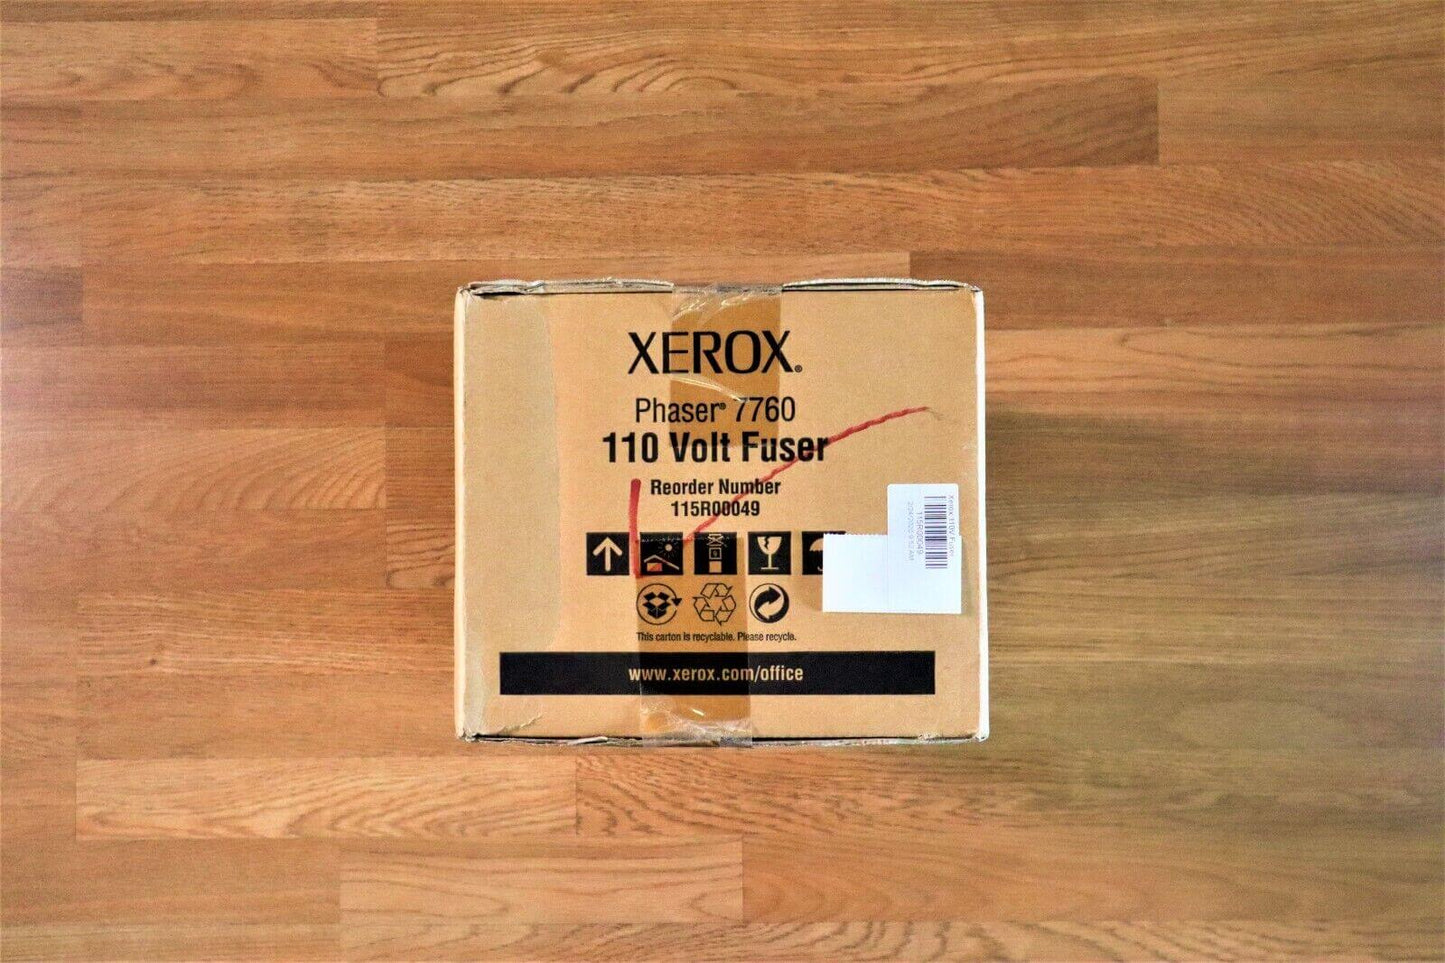 Genuine Xerox Phaser 7760 110v Fuser 115R00049 Color Laser Printer Same Day Ship - copier-clearance-center